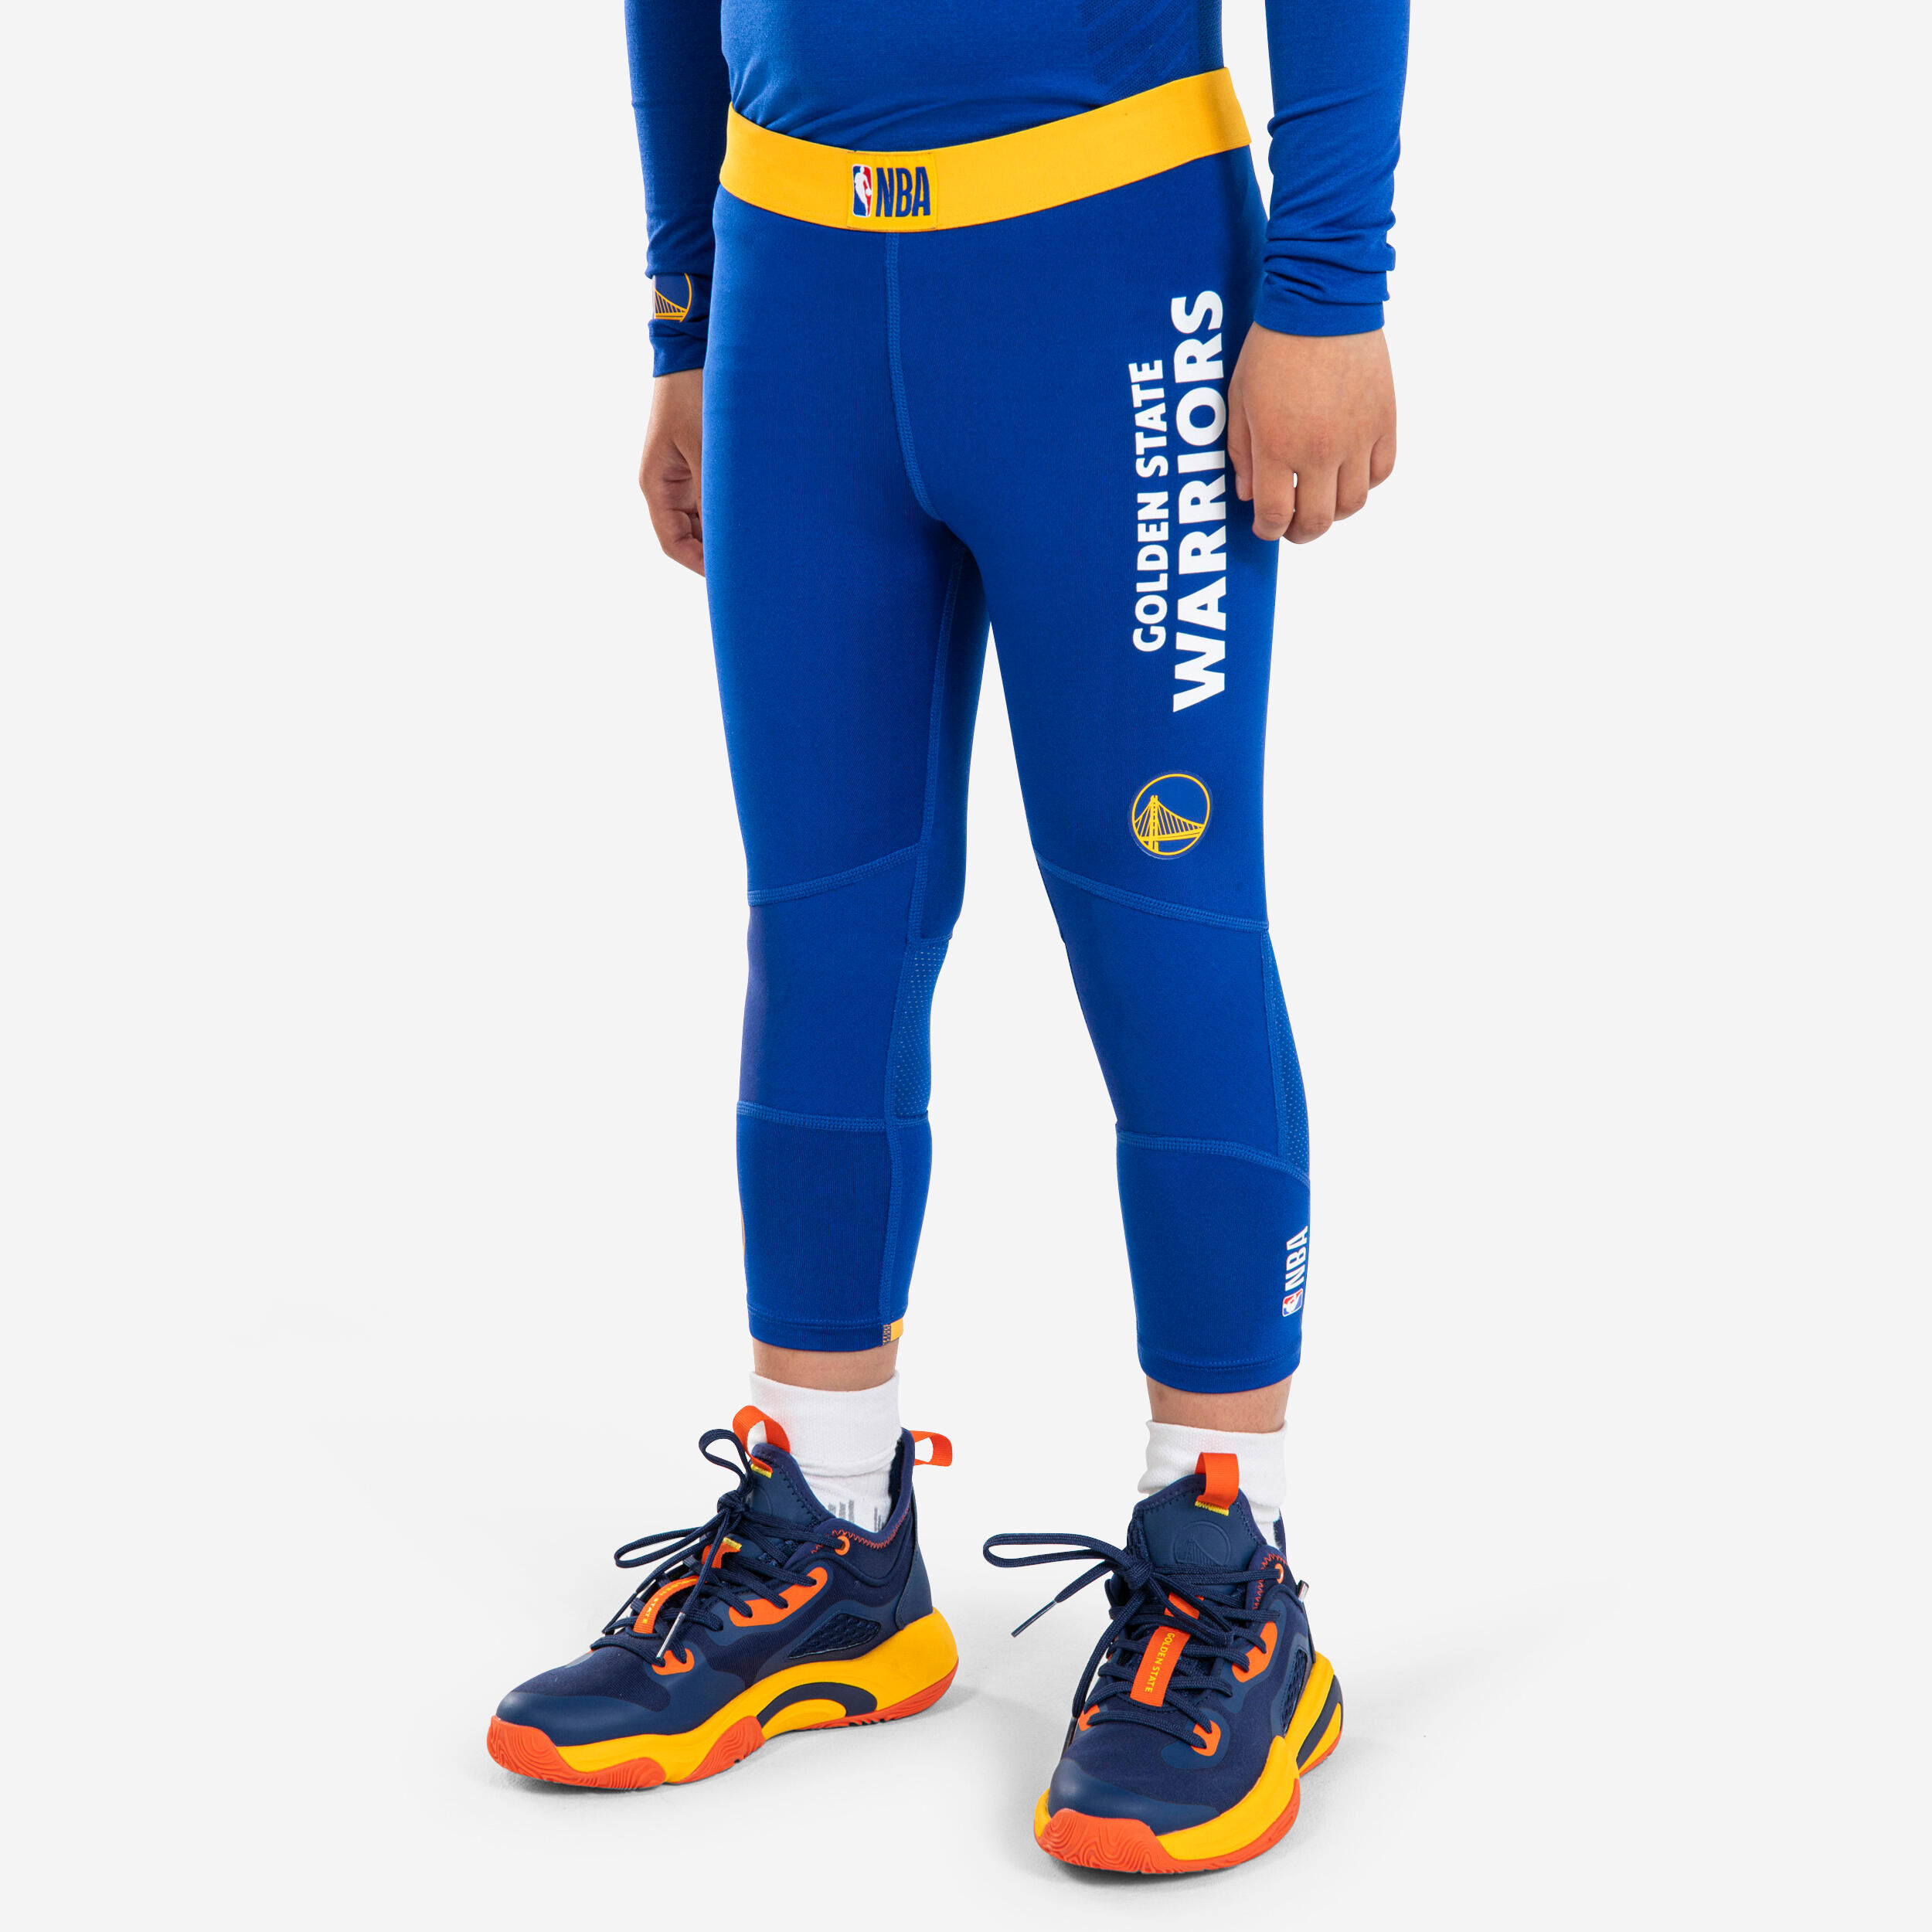  Boys Basketball Compression Pants One Leg Football Tights  3/4 Youth Sports Base Layer Workout Capri Leggings Blue XL